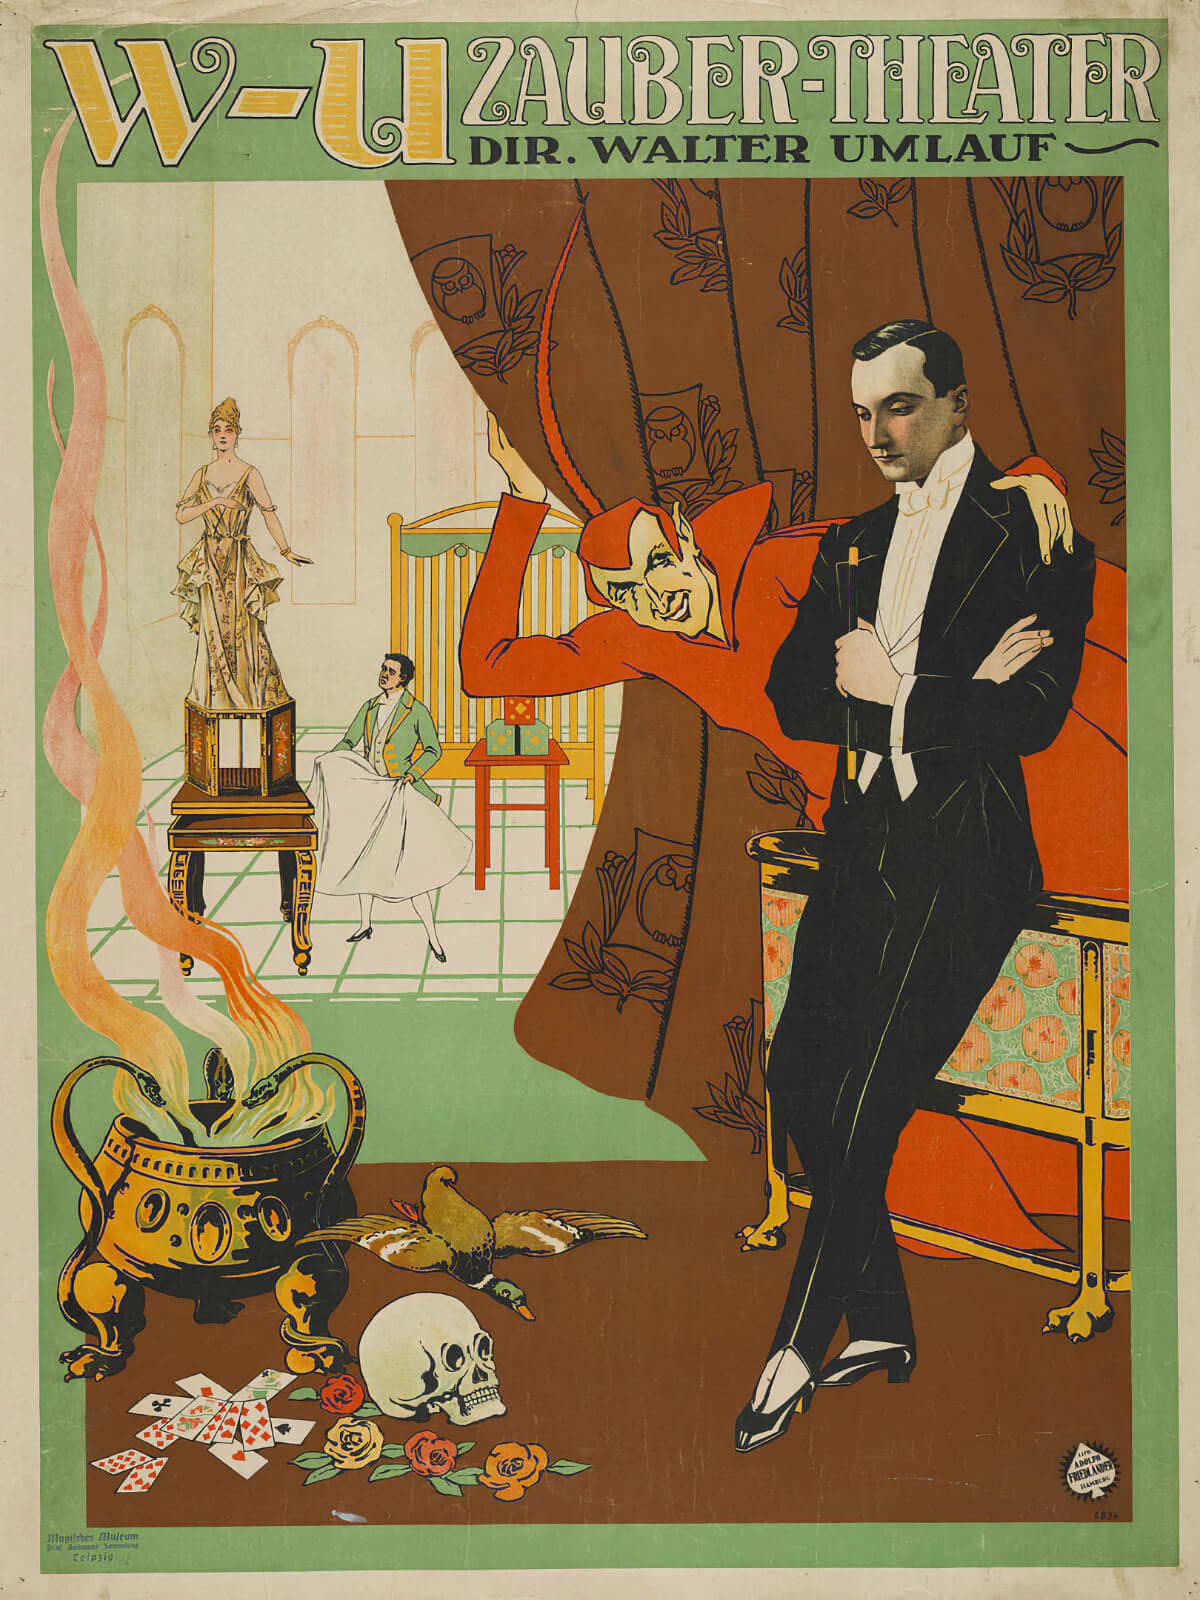 WU Magic Theater by Adolph Friedländer, 1919